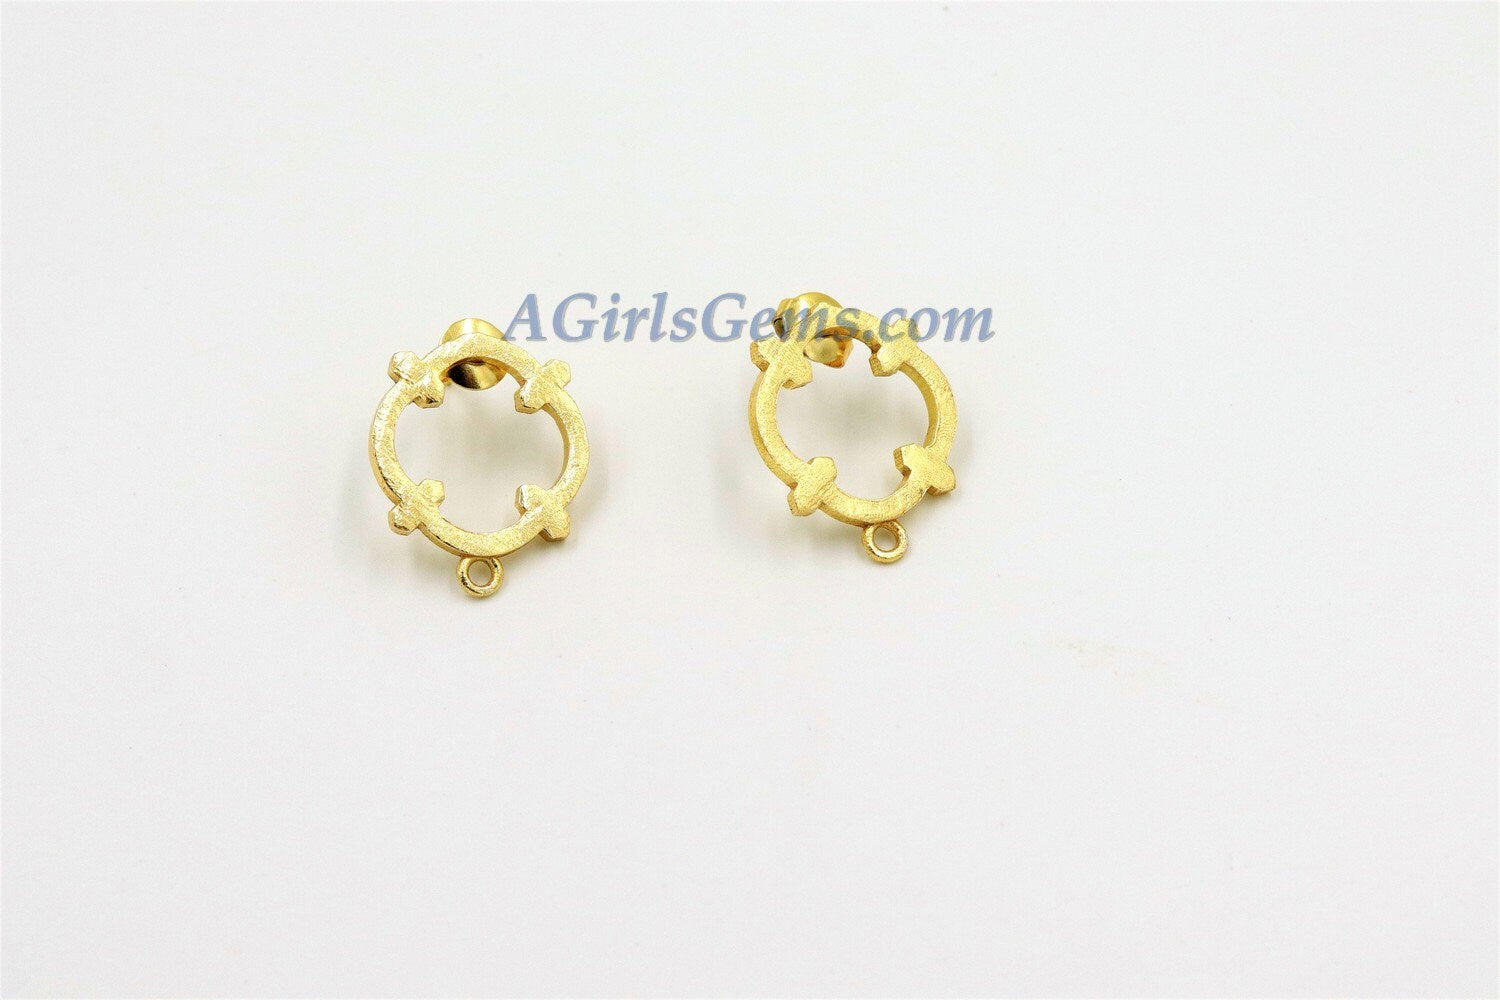 Brushed Gold Clover Quatrefoil Earrings, Closed Loop Cross Shape Stud Earring Findings #791, Matte Gold Earring studs, Jewelry Findings - A Girls Gems